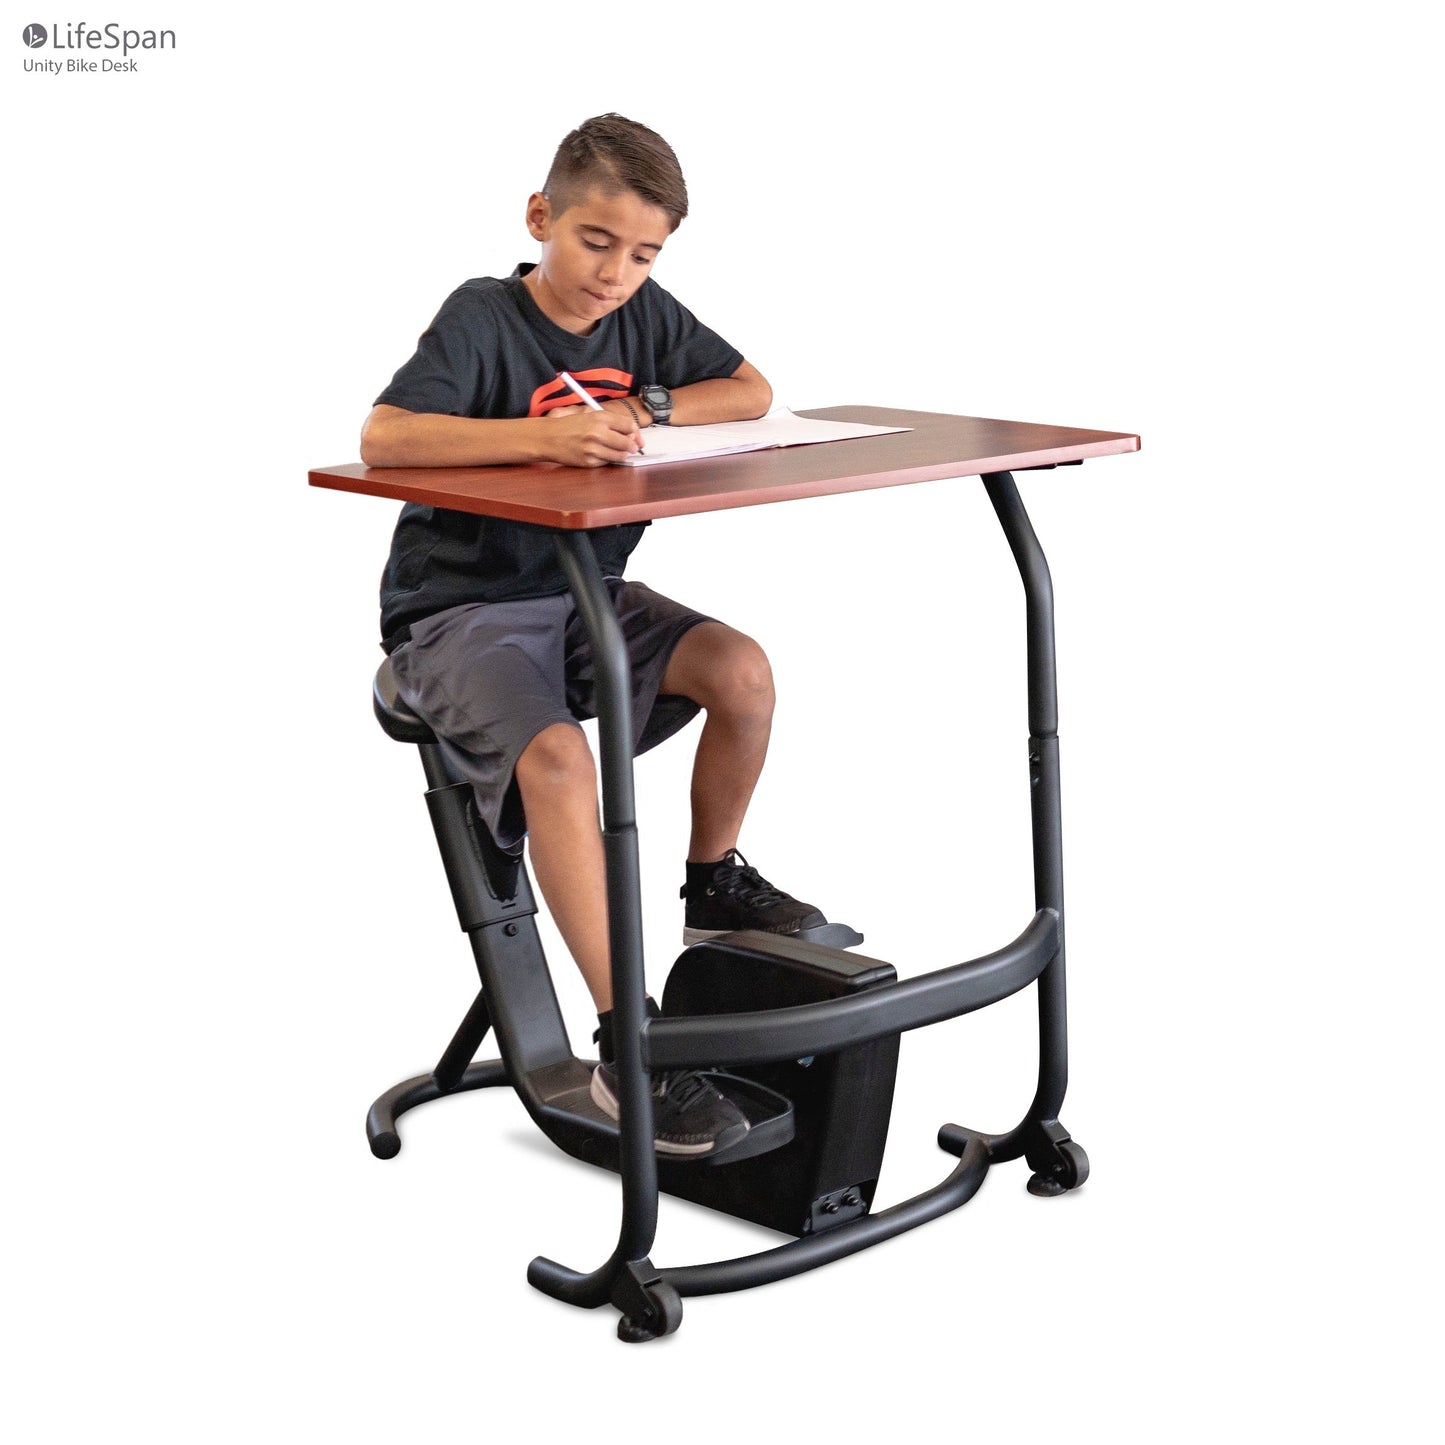 Lifespan_workplace_unity pedal desk_school_005